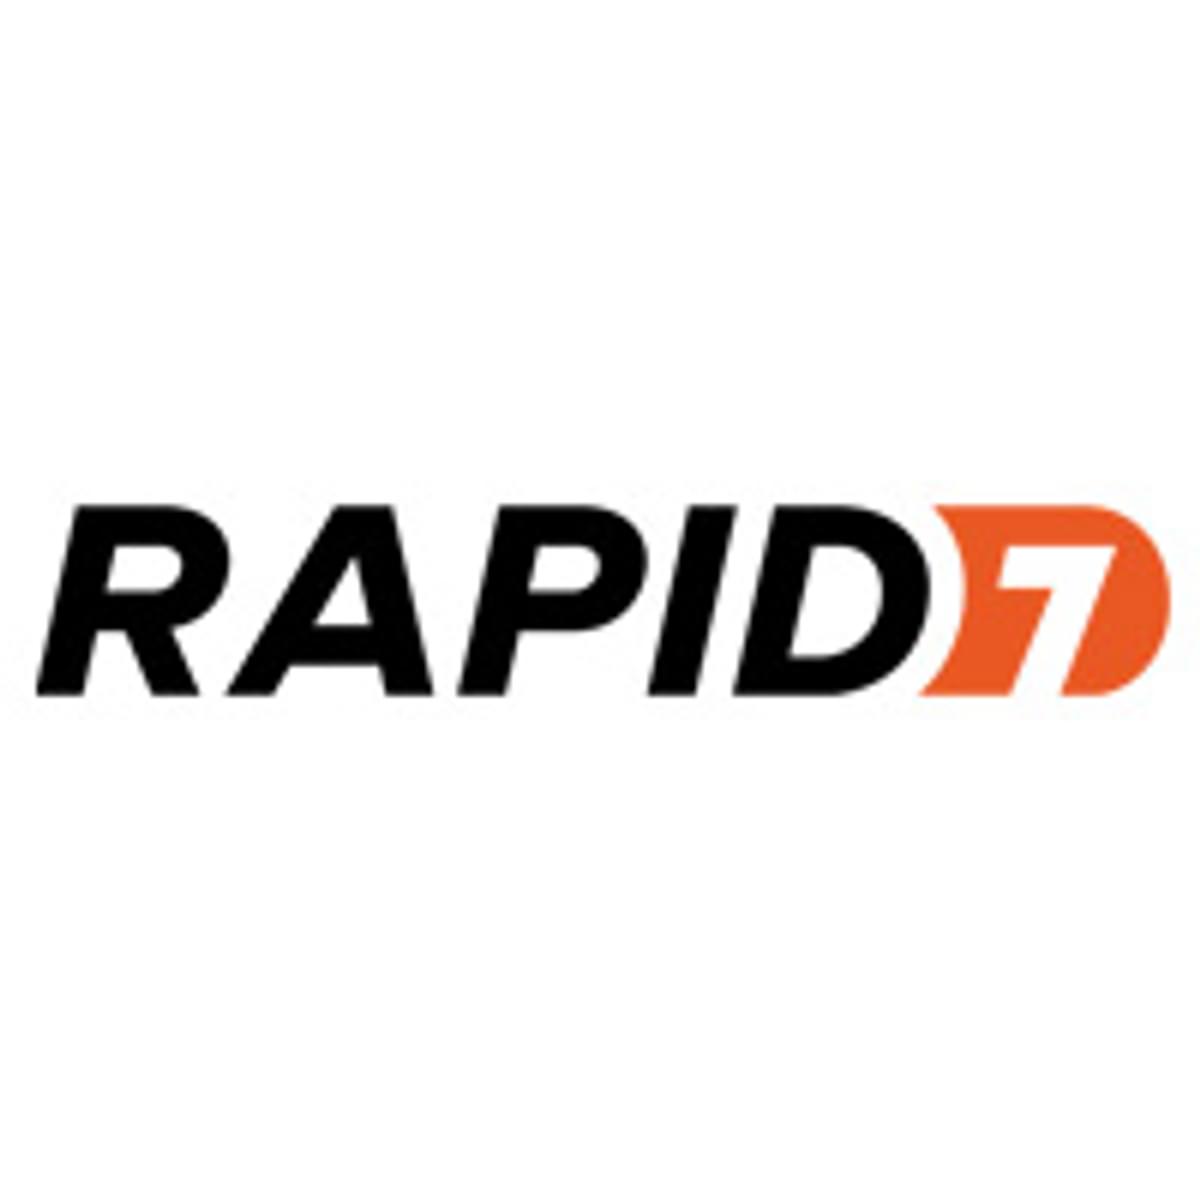 Rapid7 koopt security orchestratie- en automation specialist Komand image